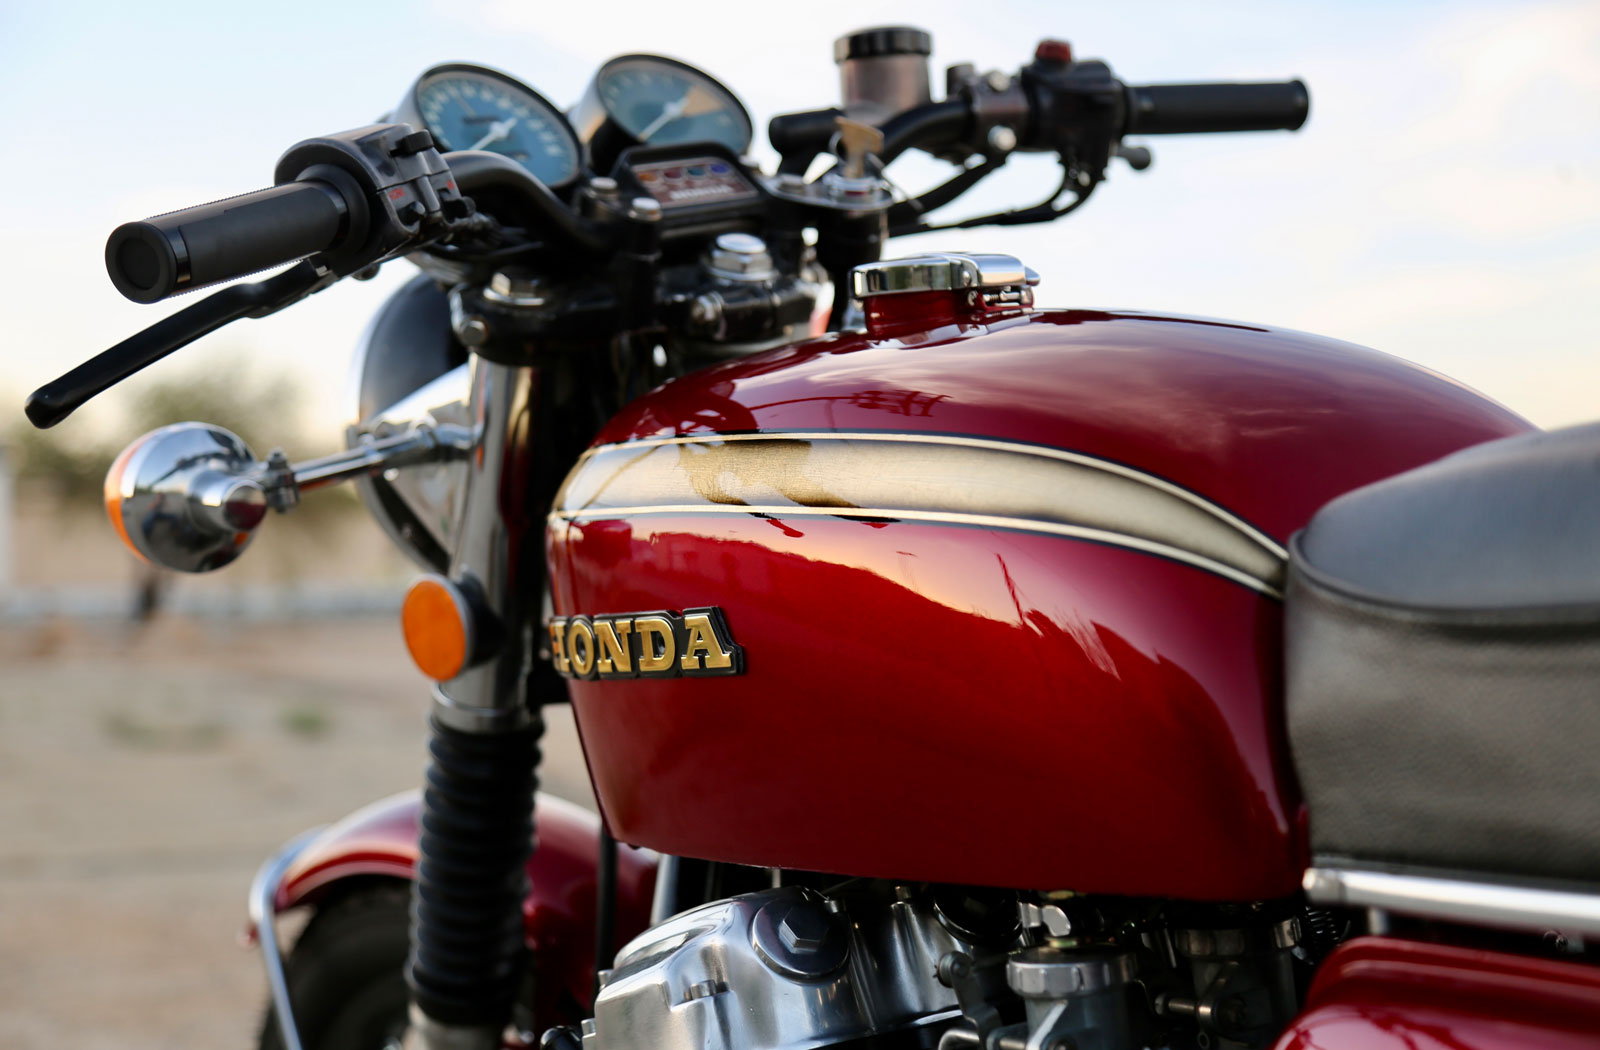 Honda CB750 restoration and mod